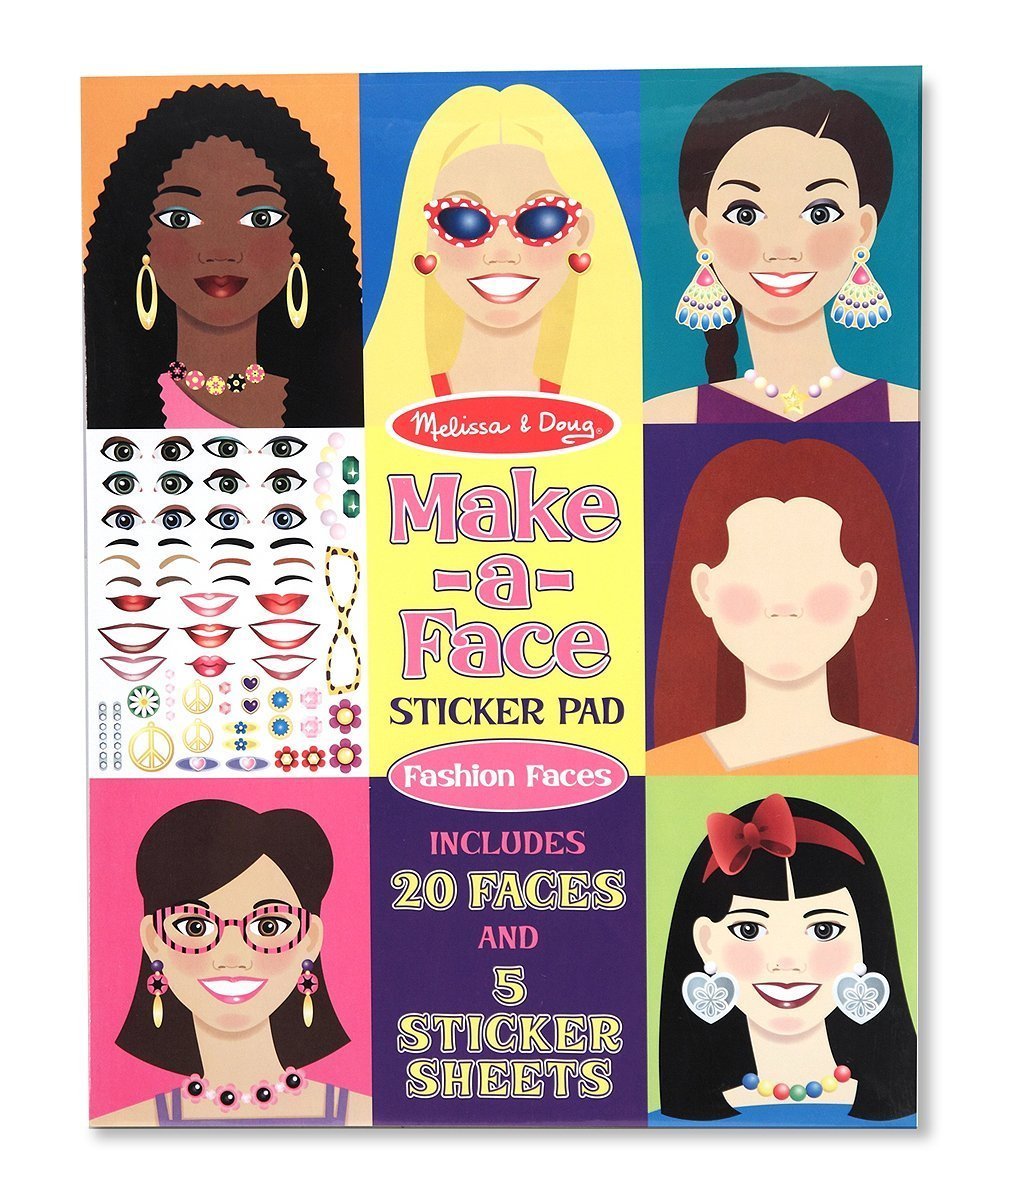 Make a Face - Sticker Pad